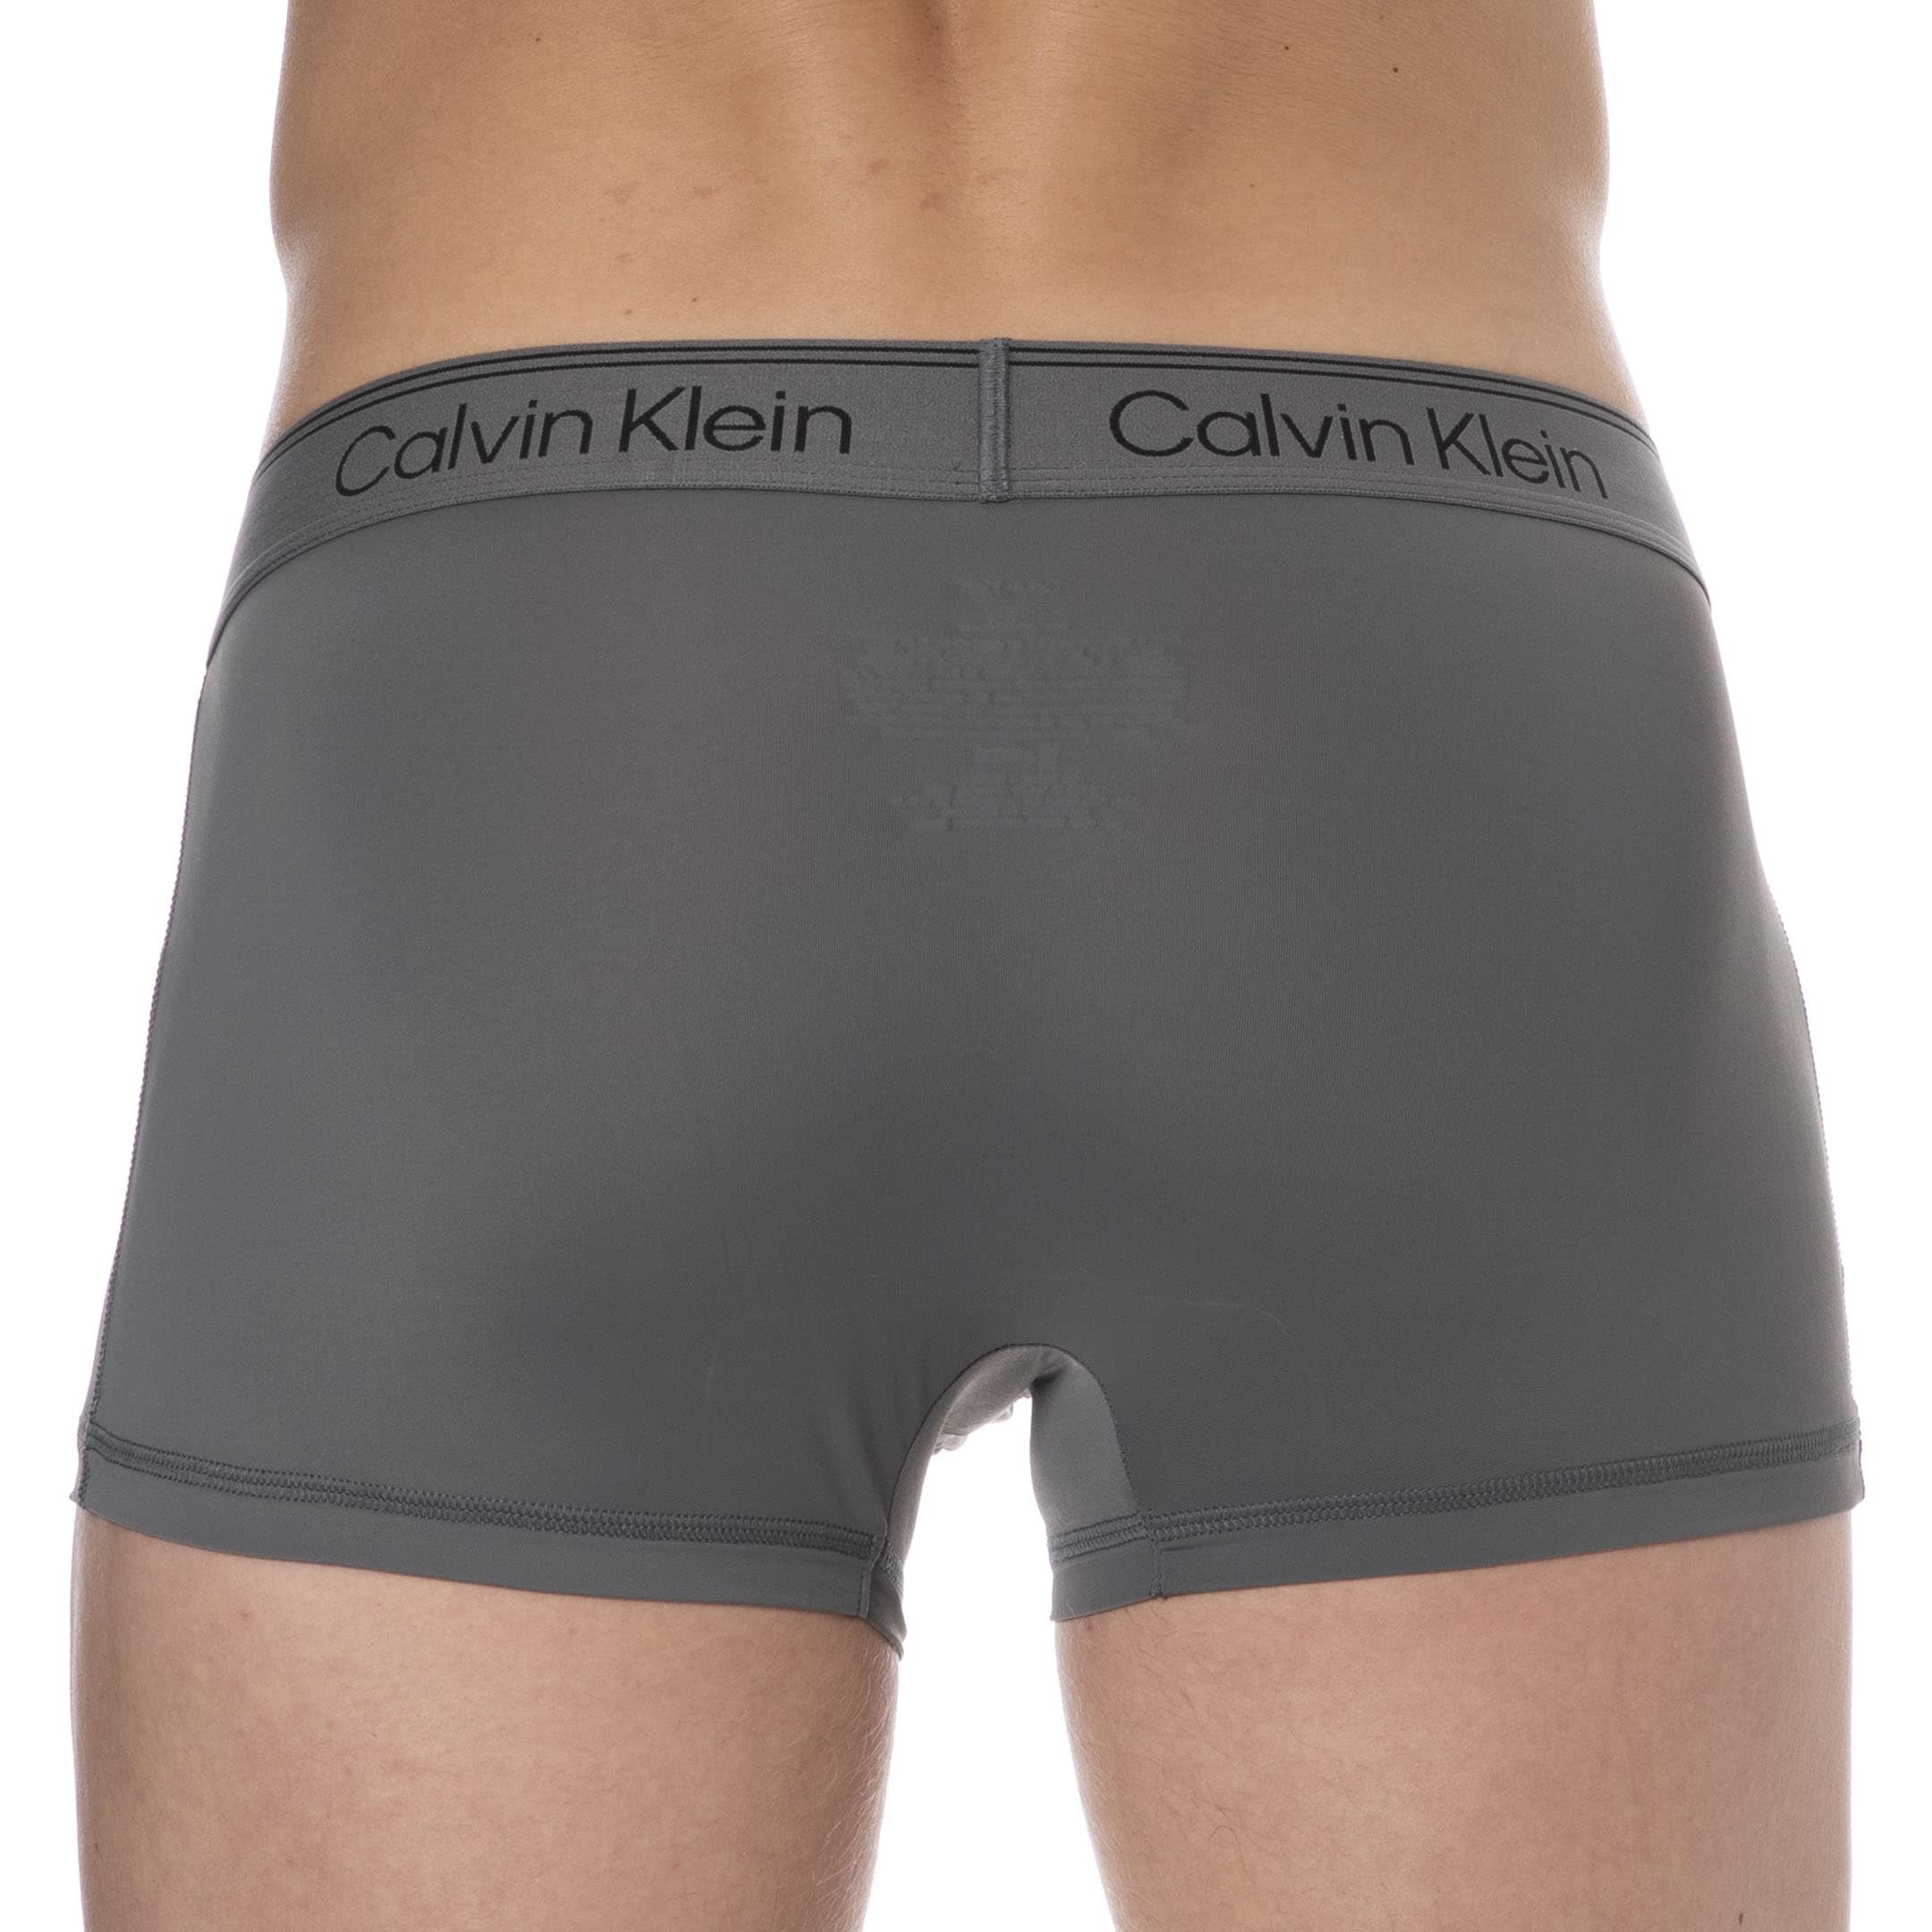 opladen Vermaken Afgekeurd Calvin Klein Athletic Micro Trunks - Charcoal | INDERWEAR